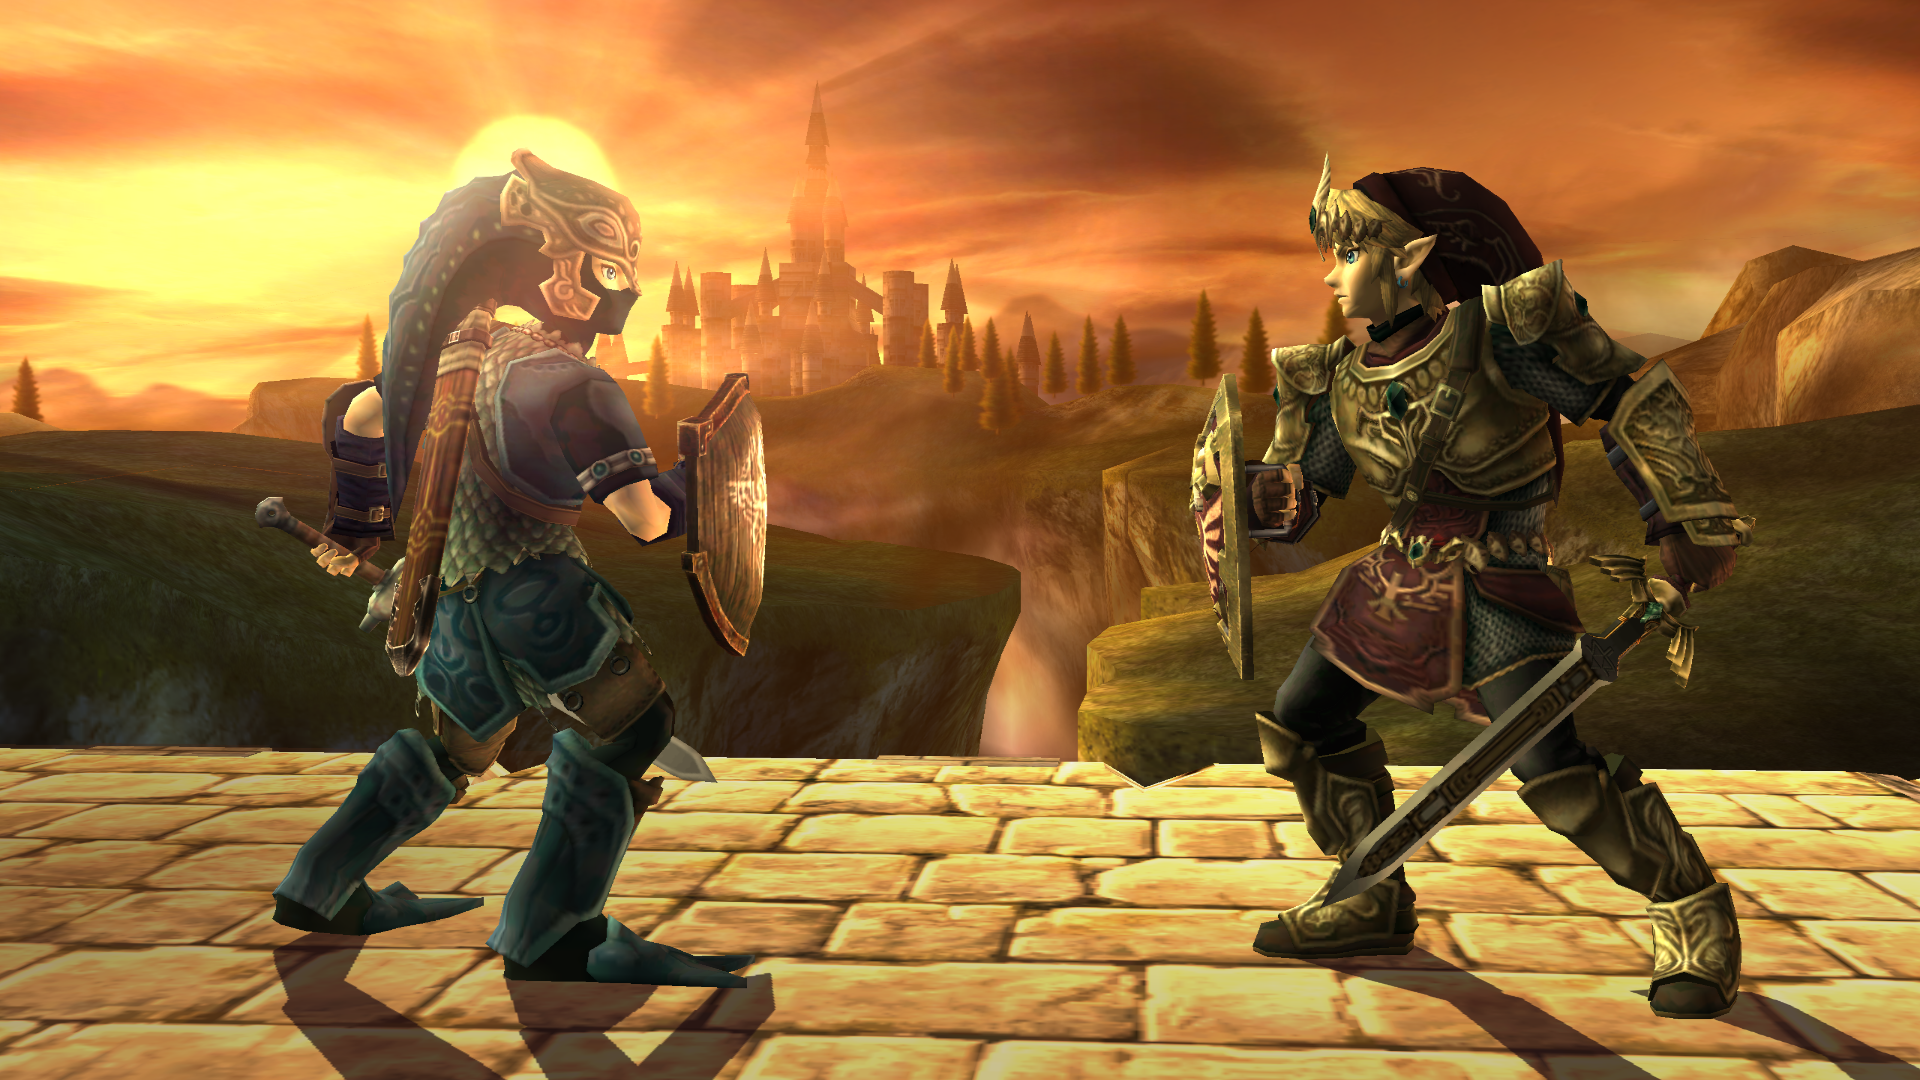 The Legend Of Zelda Twilight Princess HD Wallpaper X